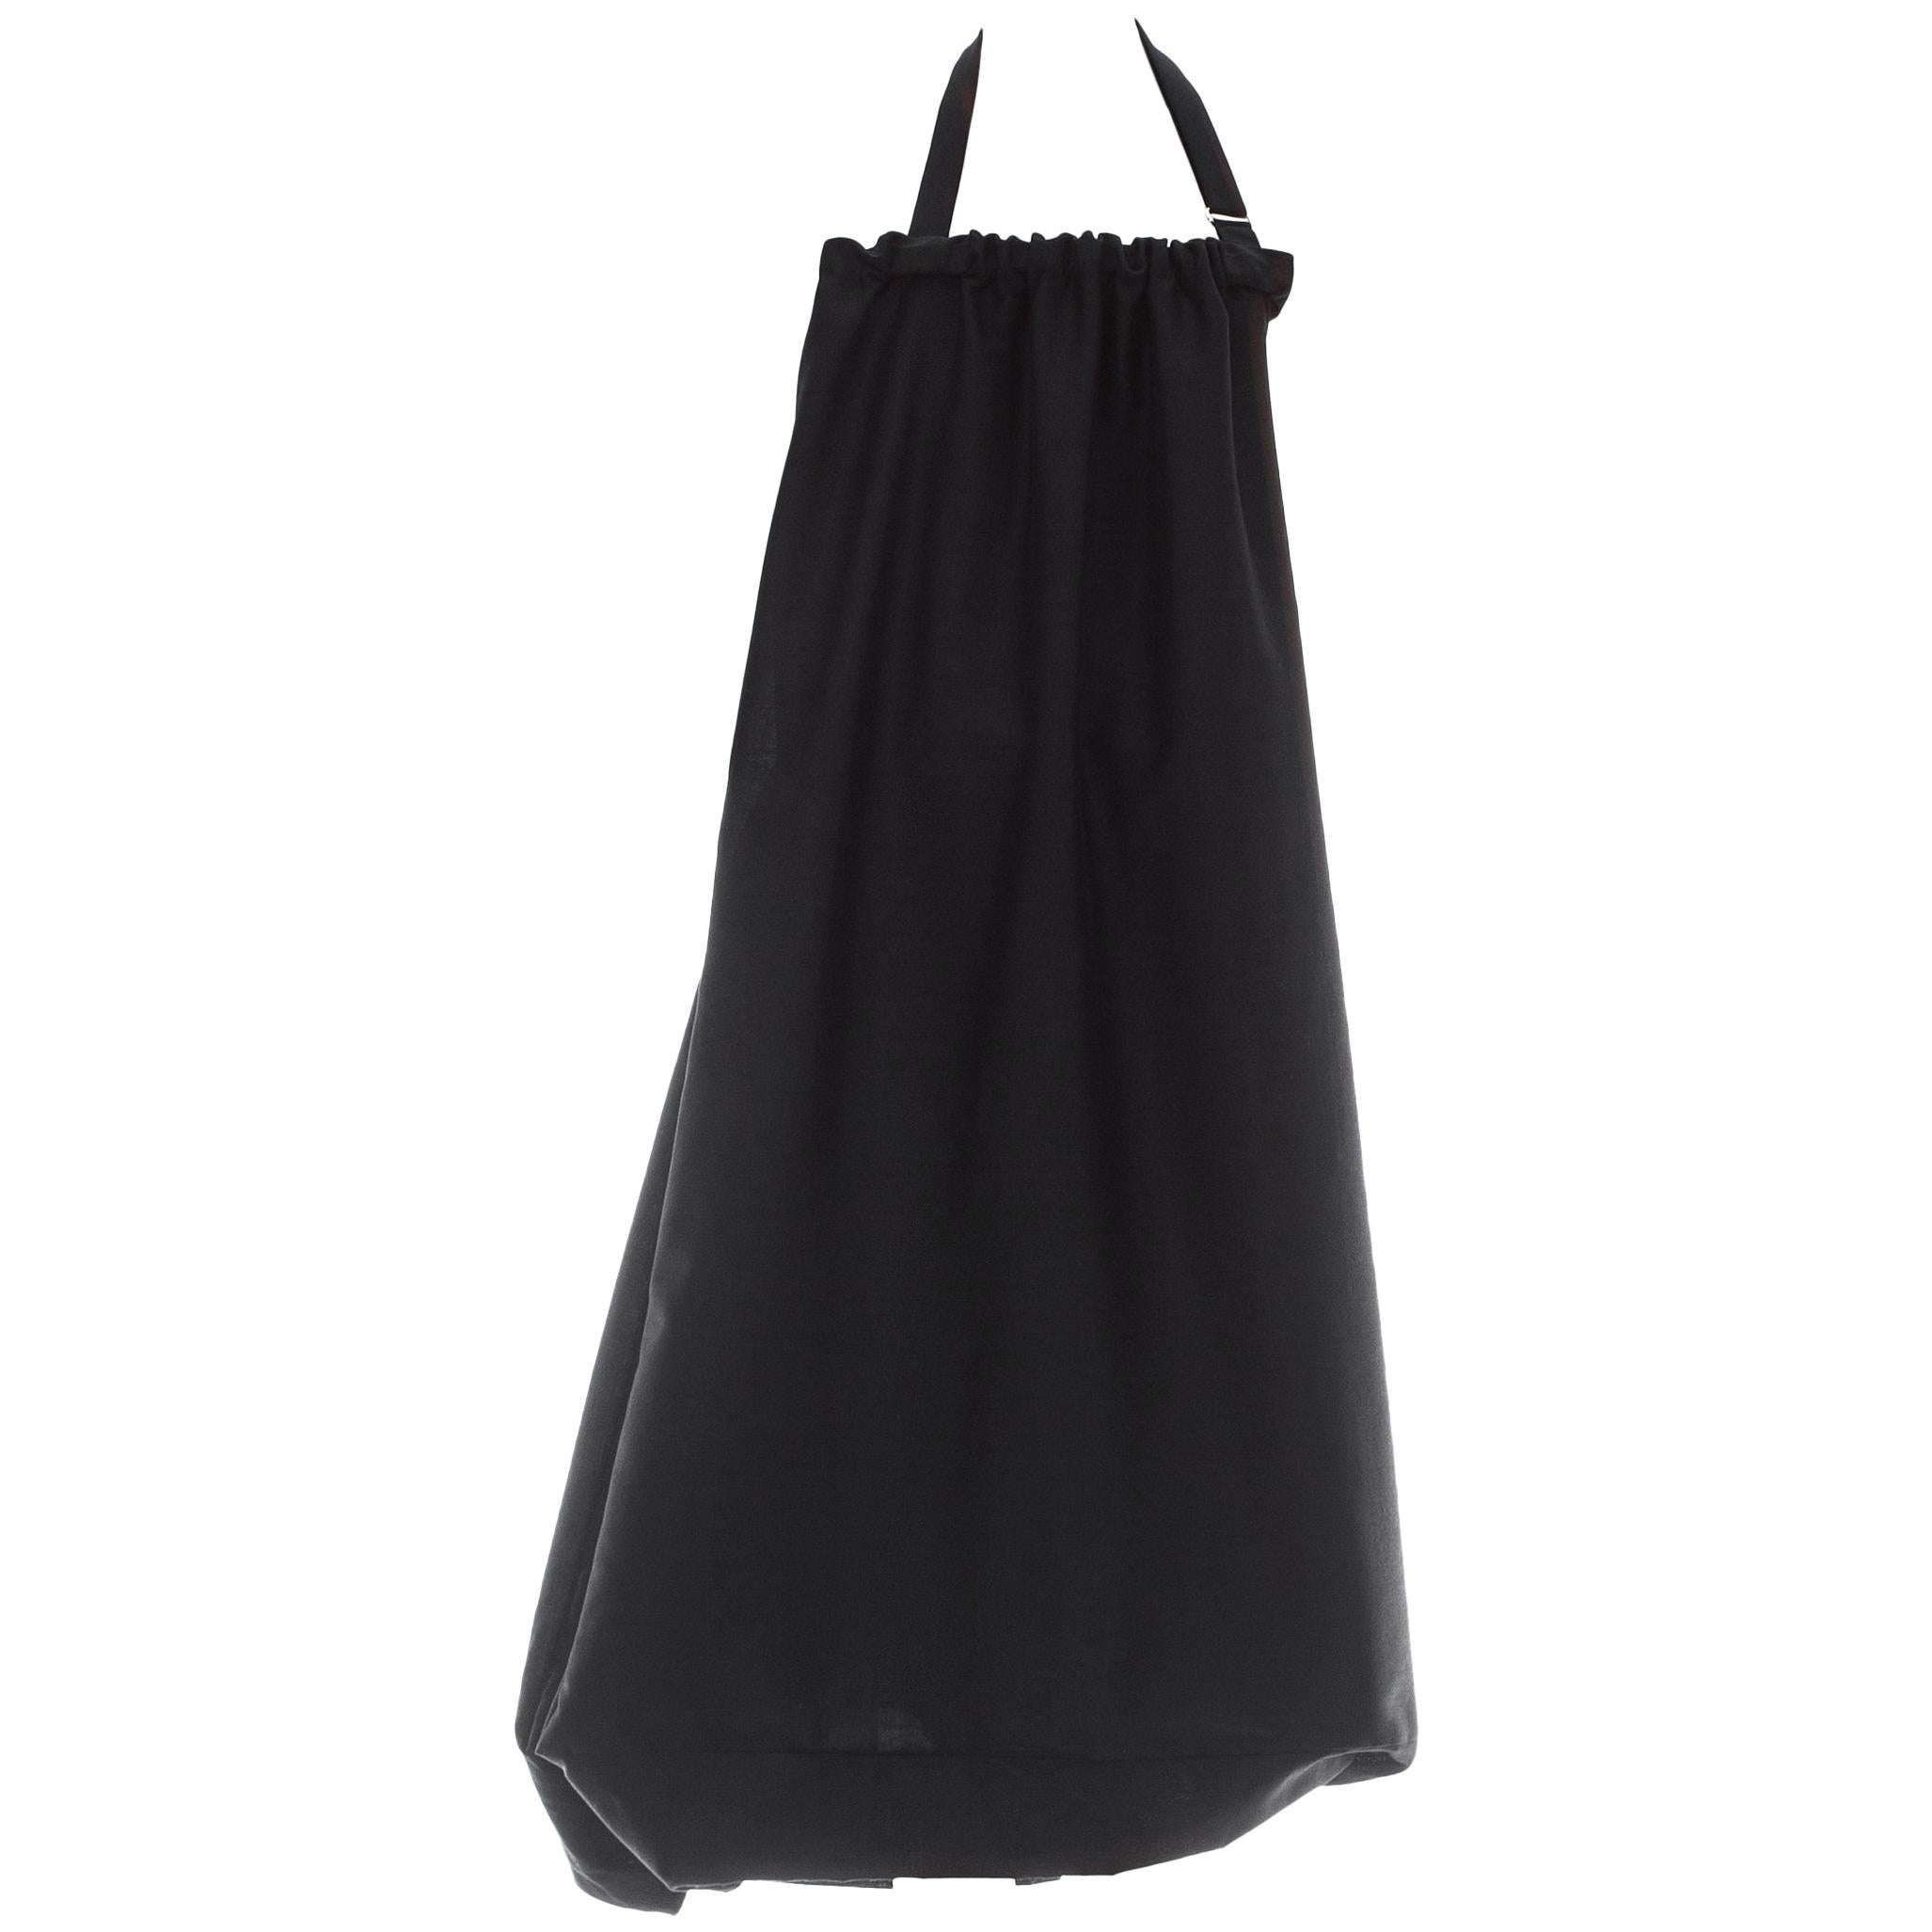 Yohji Yamamoto black wool dress with built-in bag, ss 2001 For Sale